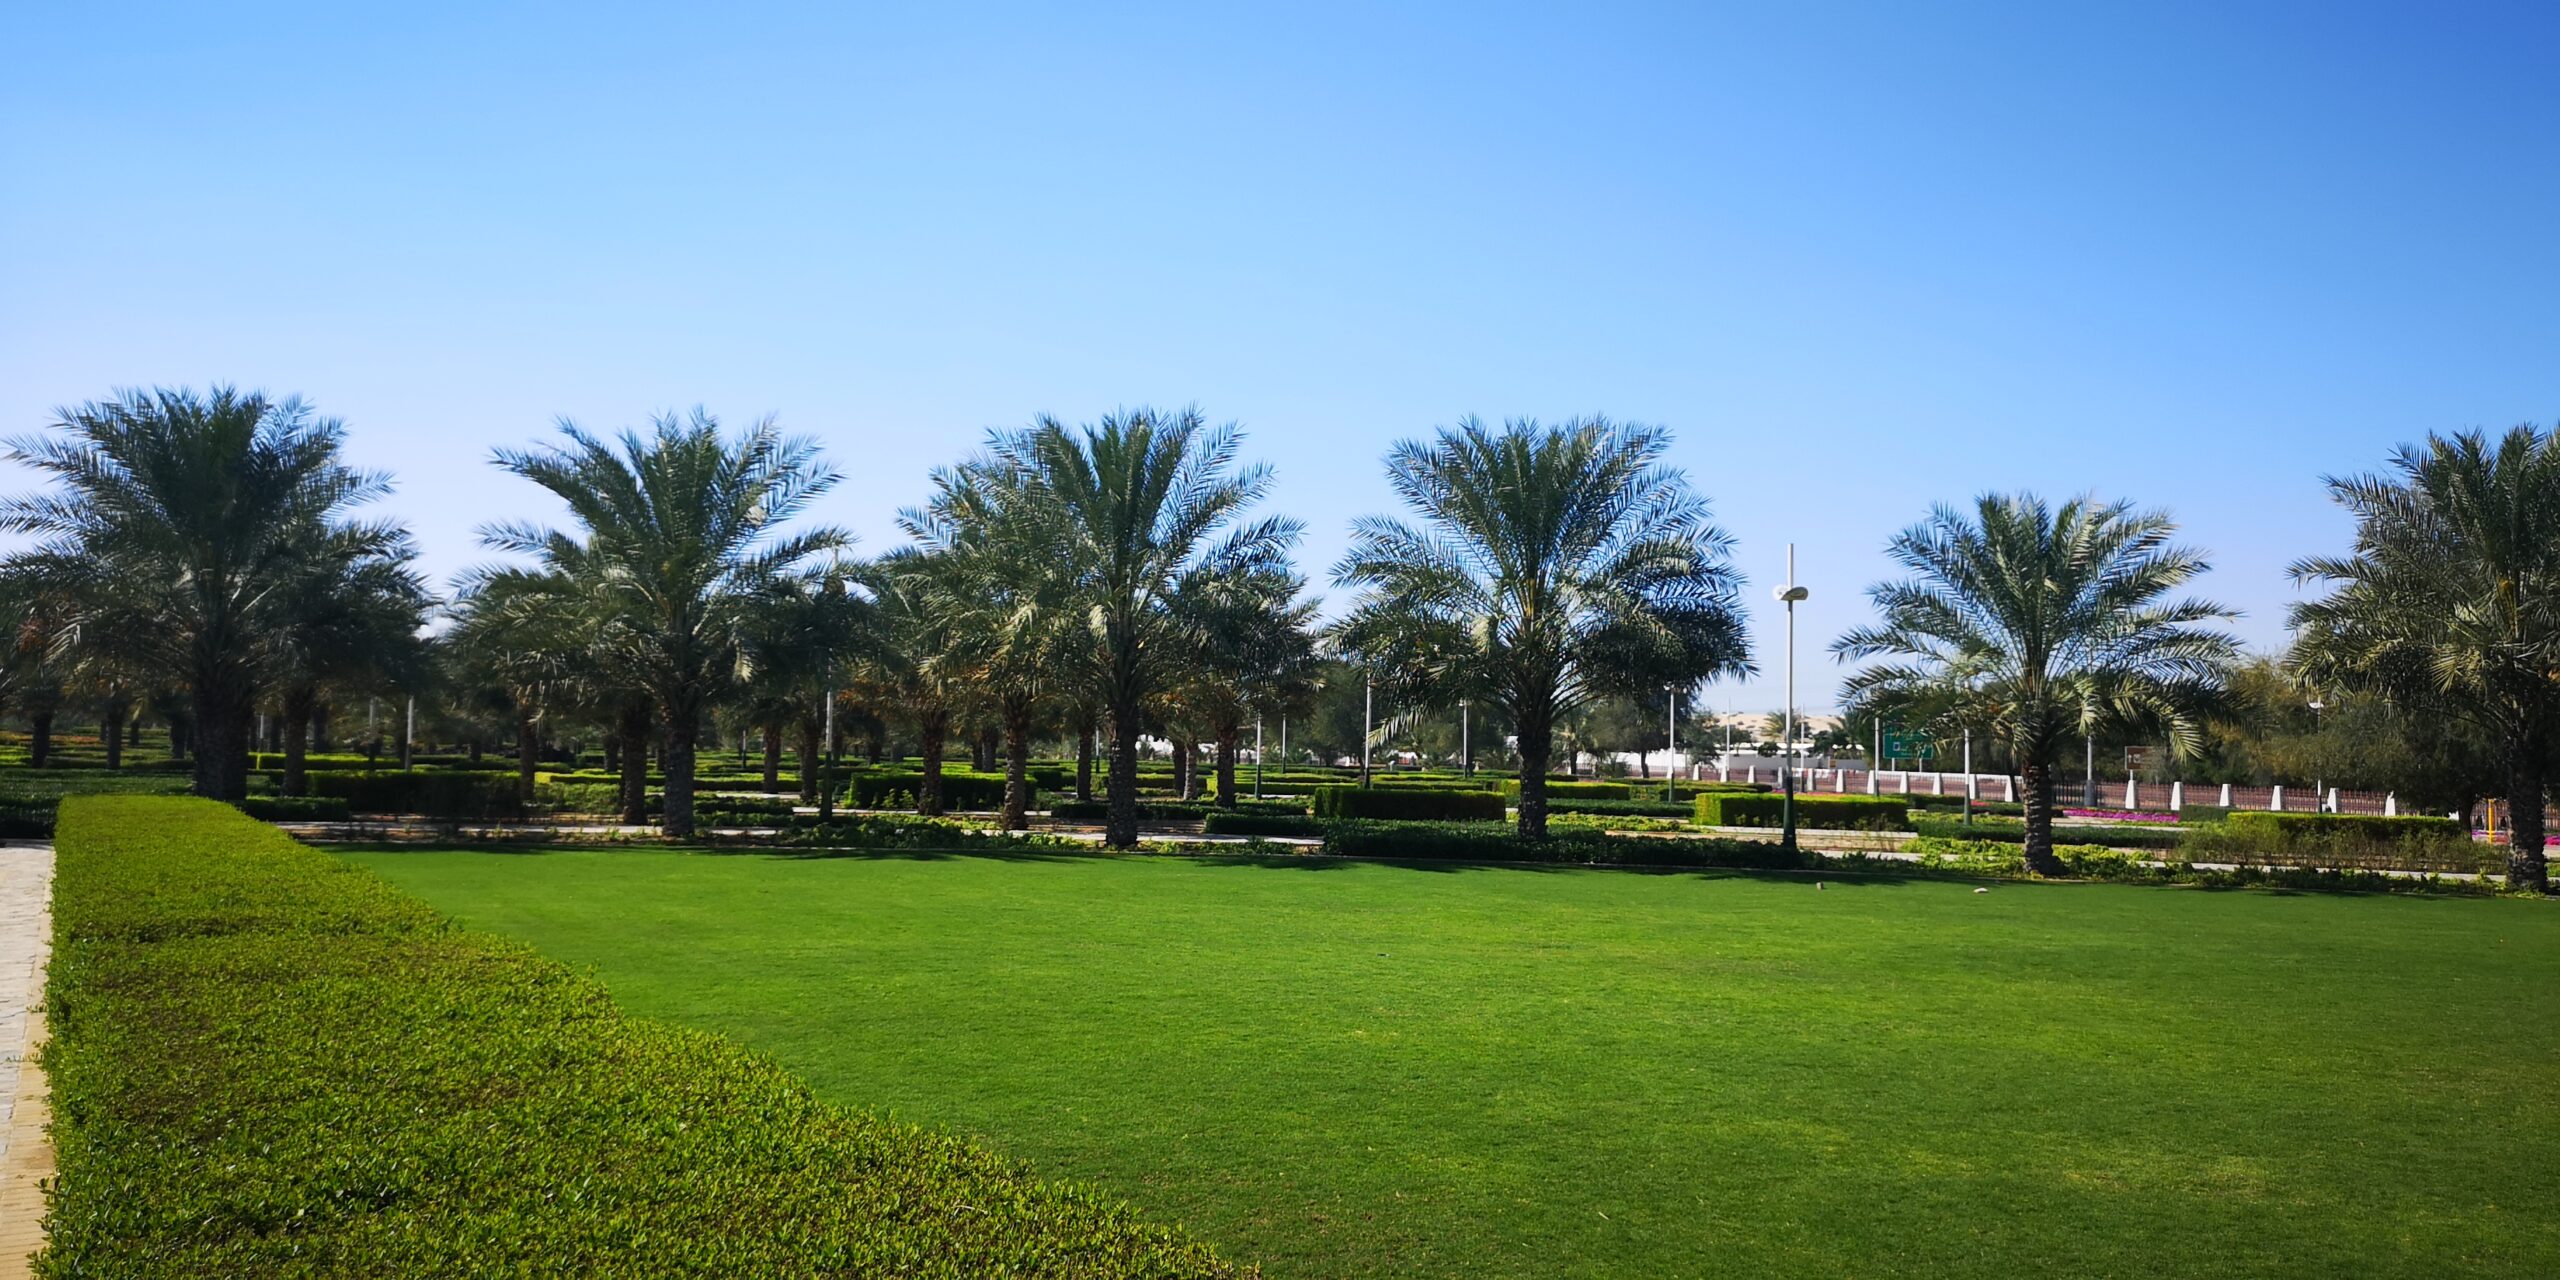 Photo from Dubai Palm Park in Al Awir, Dubai, UAE